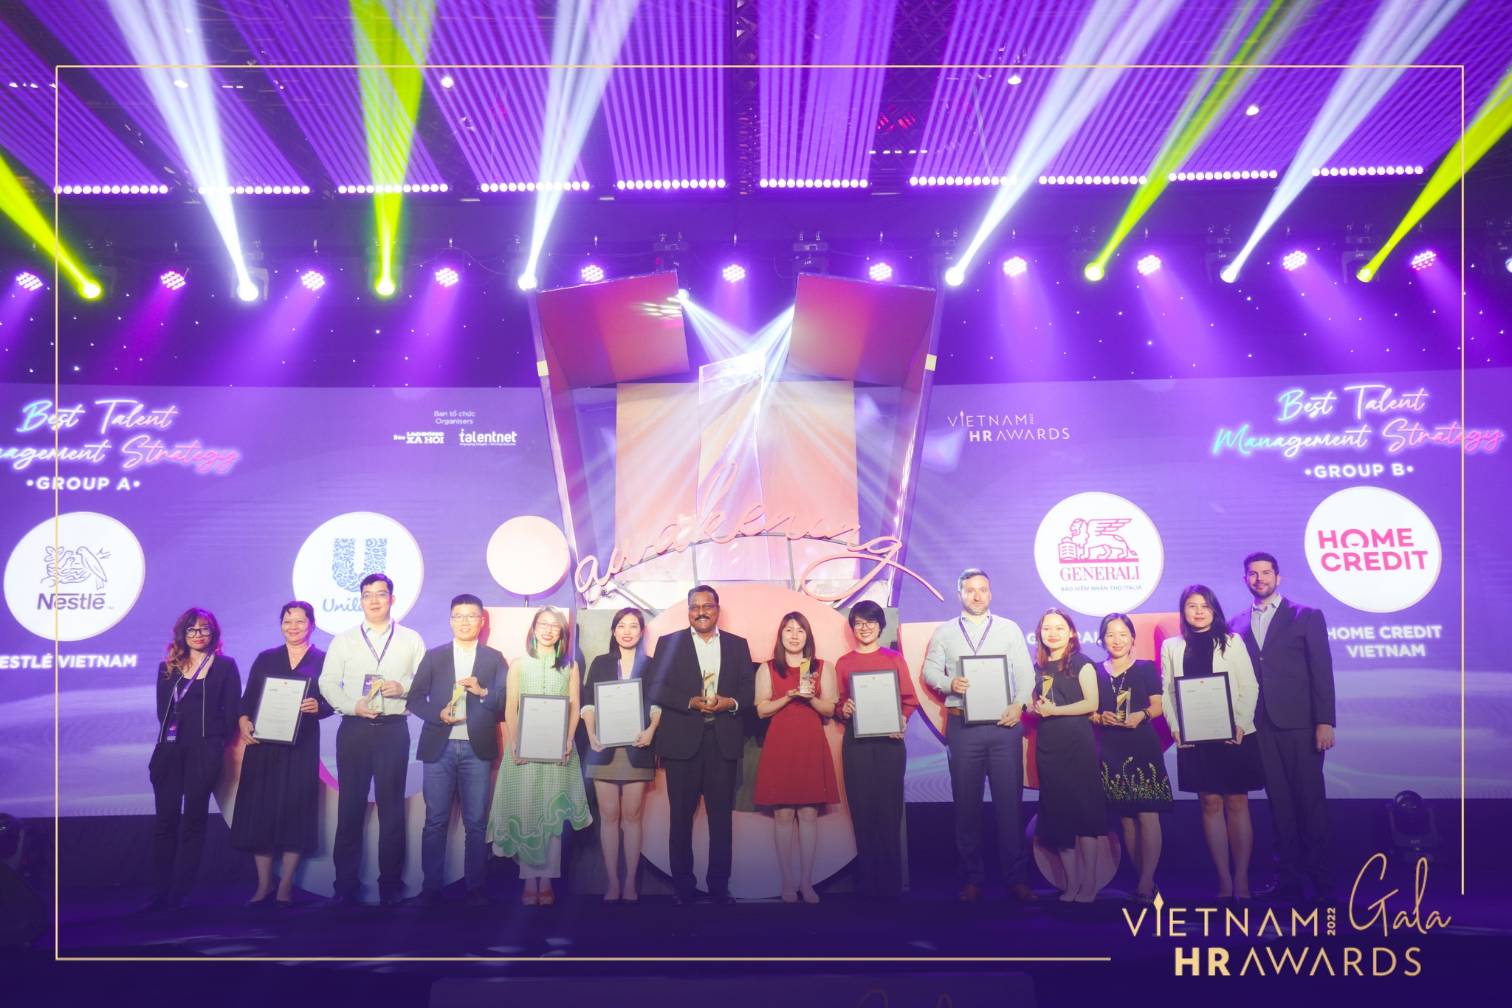 Vietnam HR Awards Gala 2022 AWAKENING JOY